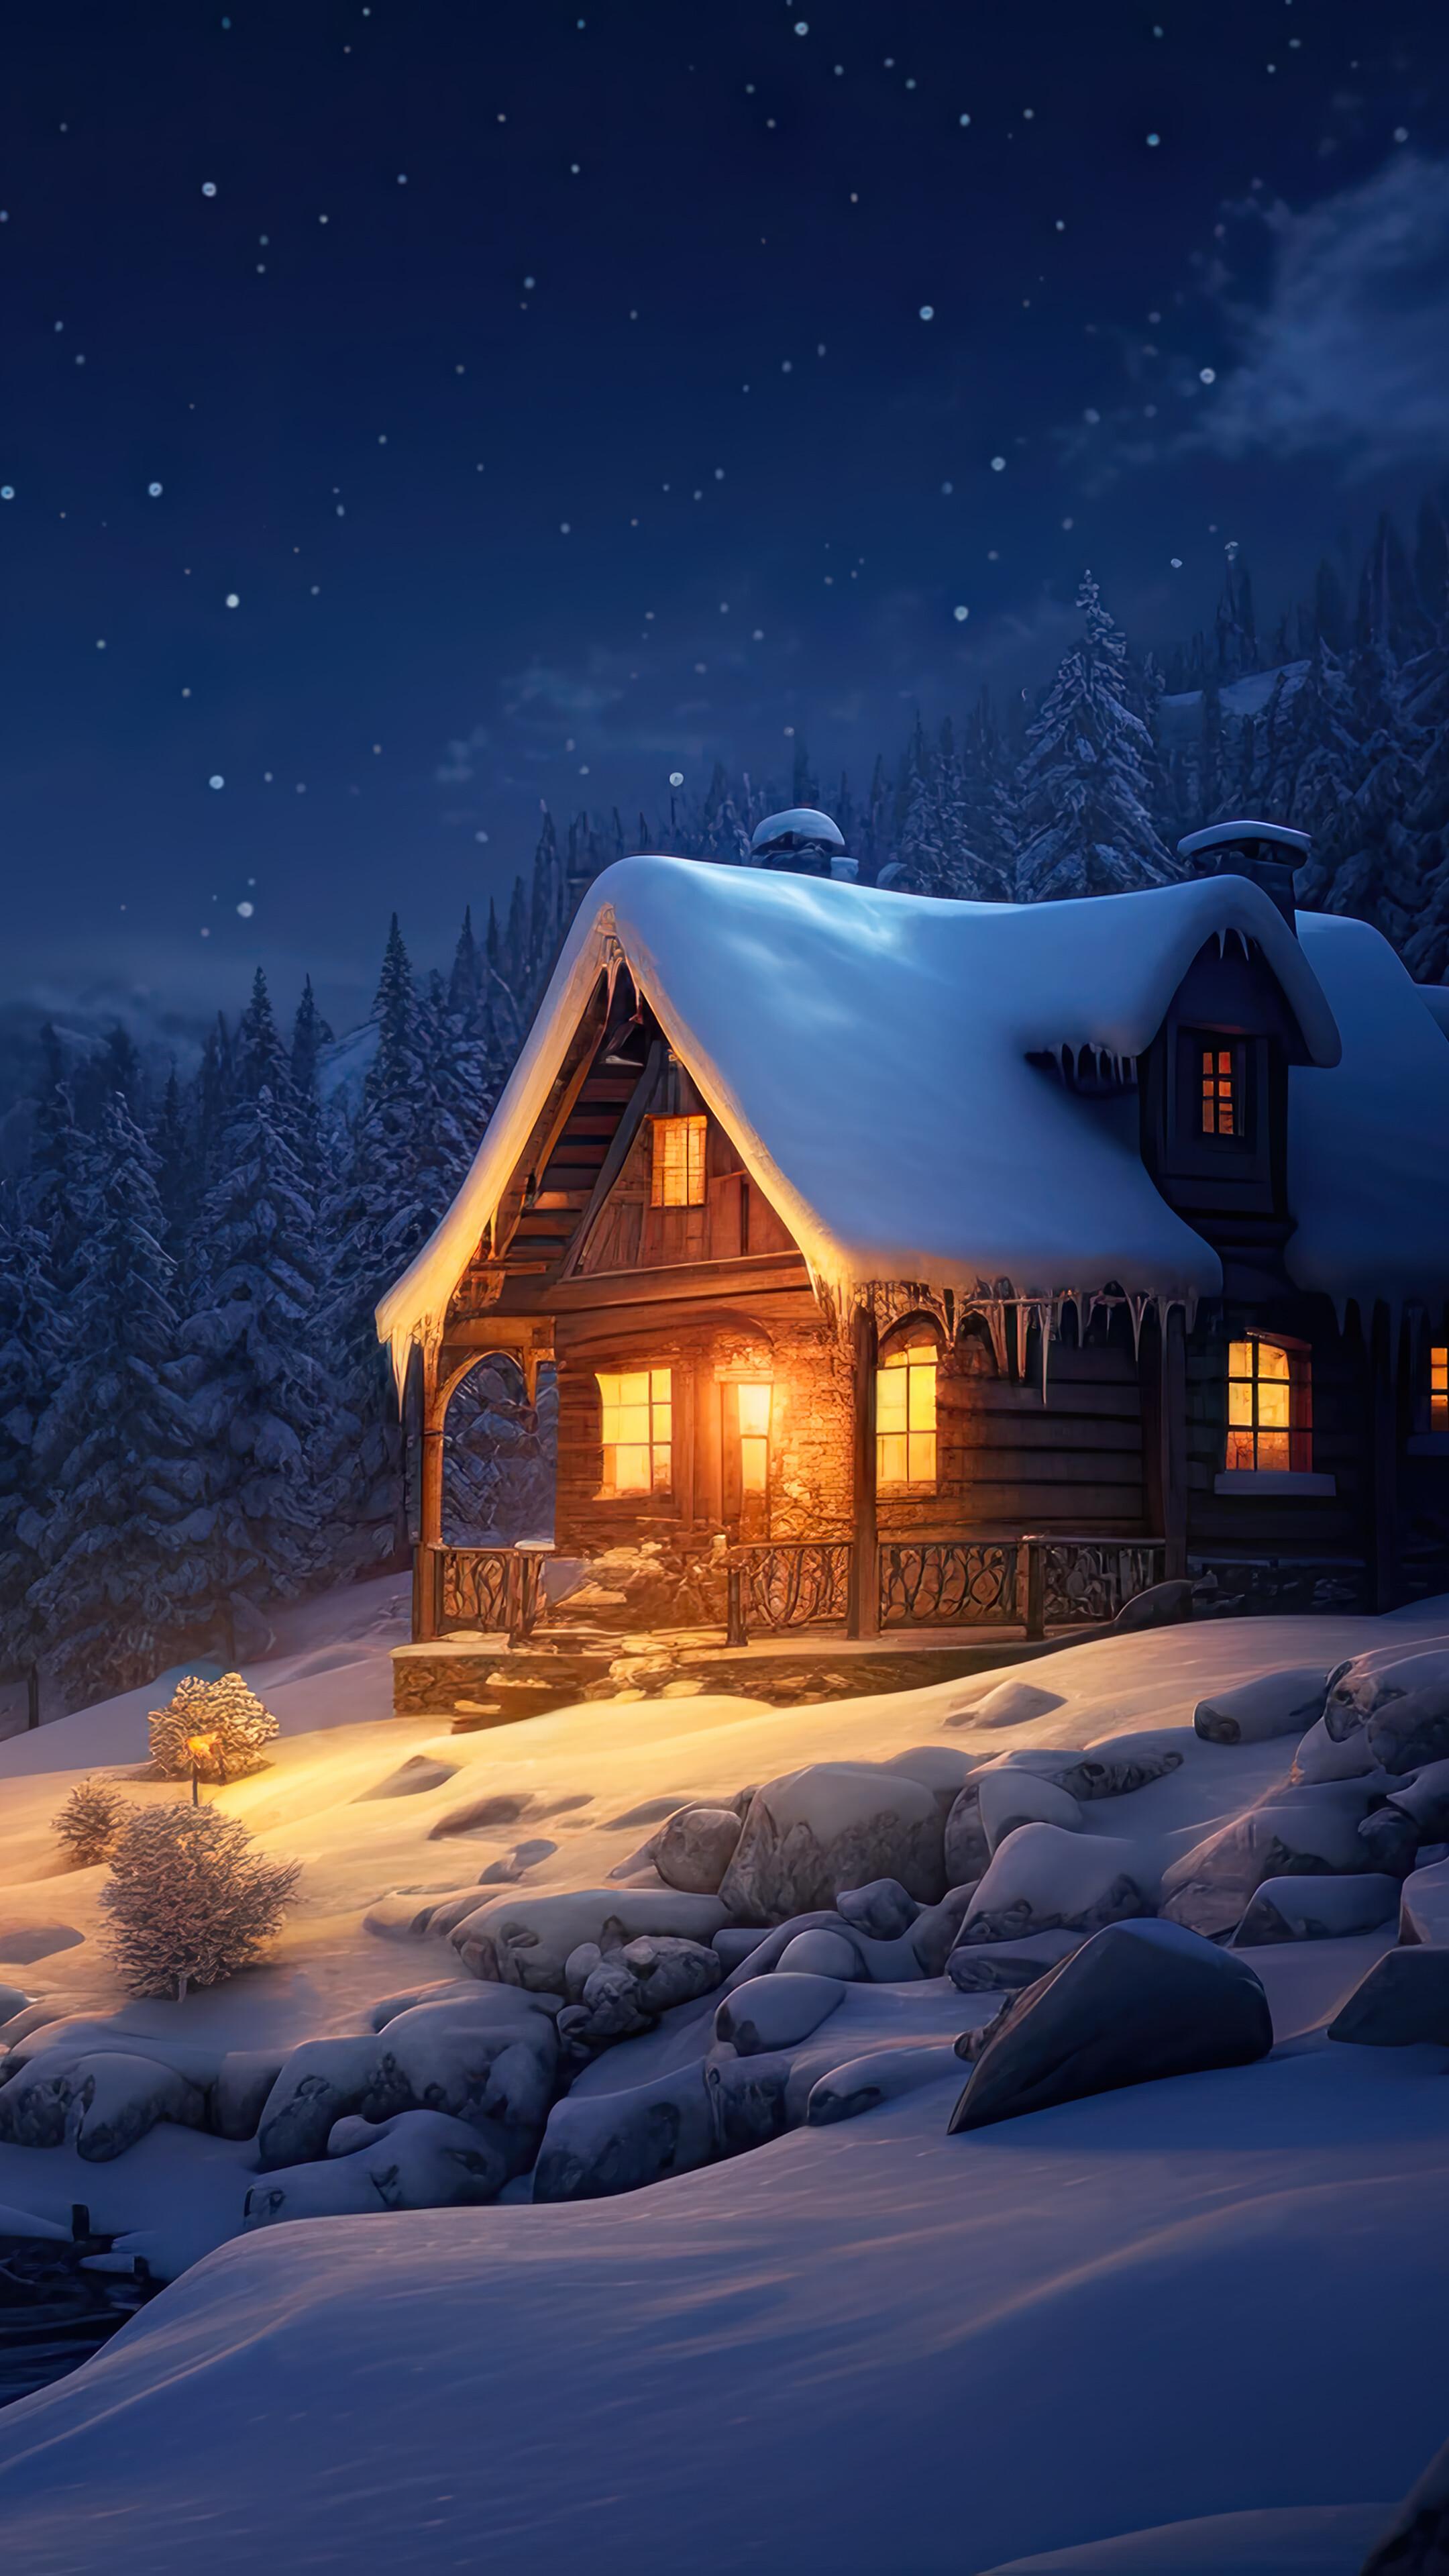 Winter Cabin Snow Forest Night Scenery 4k Wallpaper iPhone HD